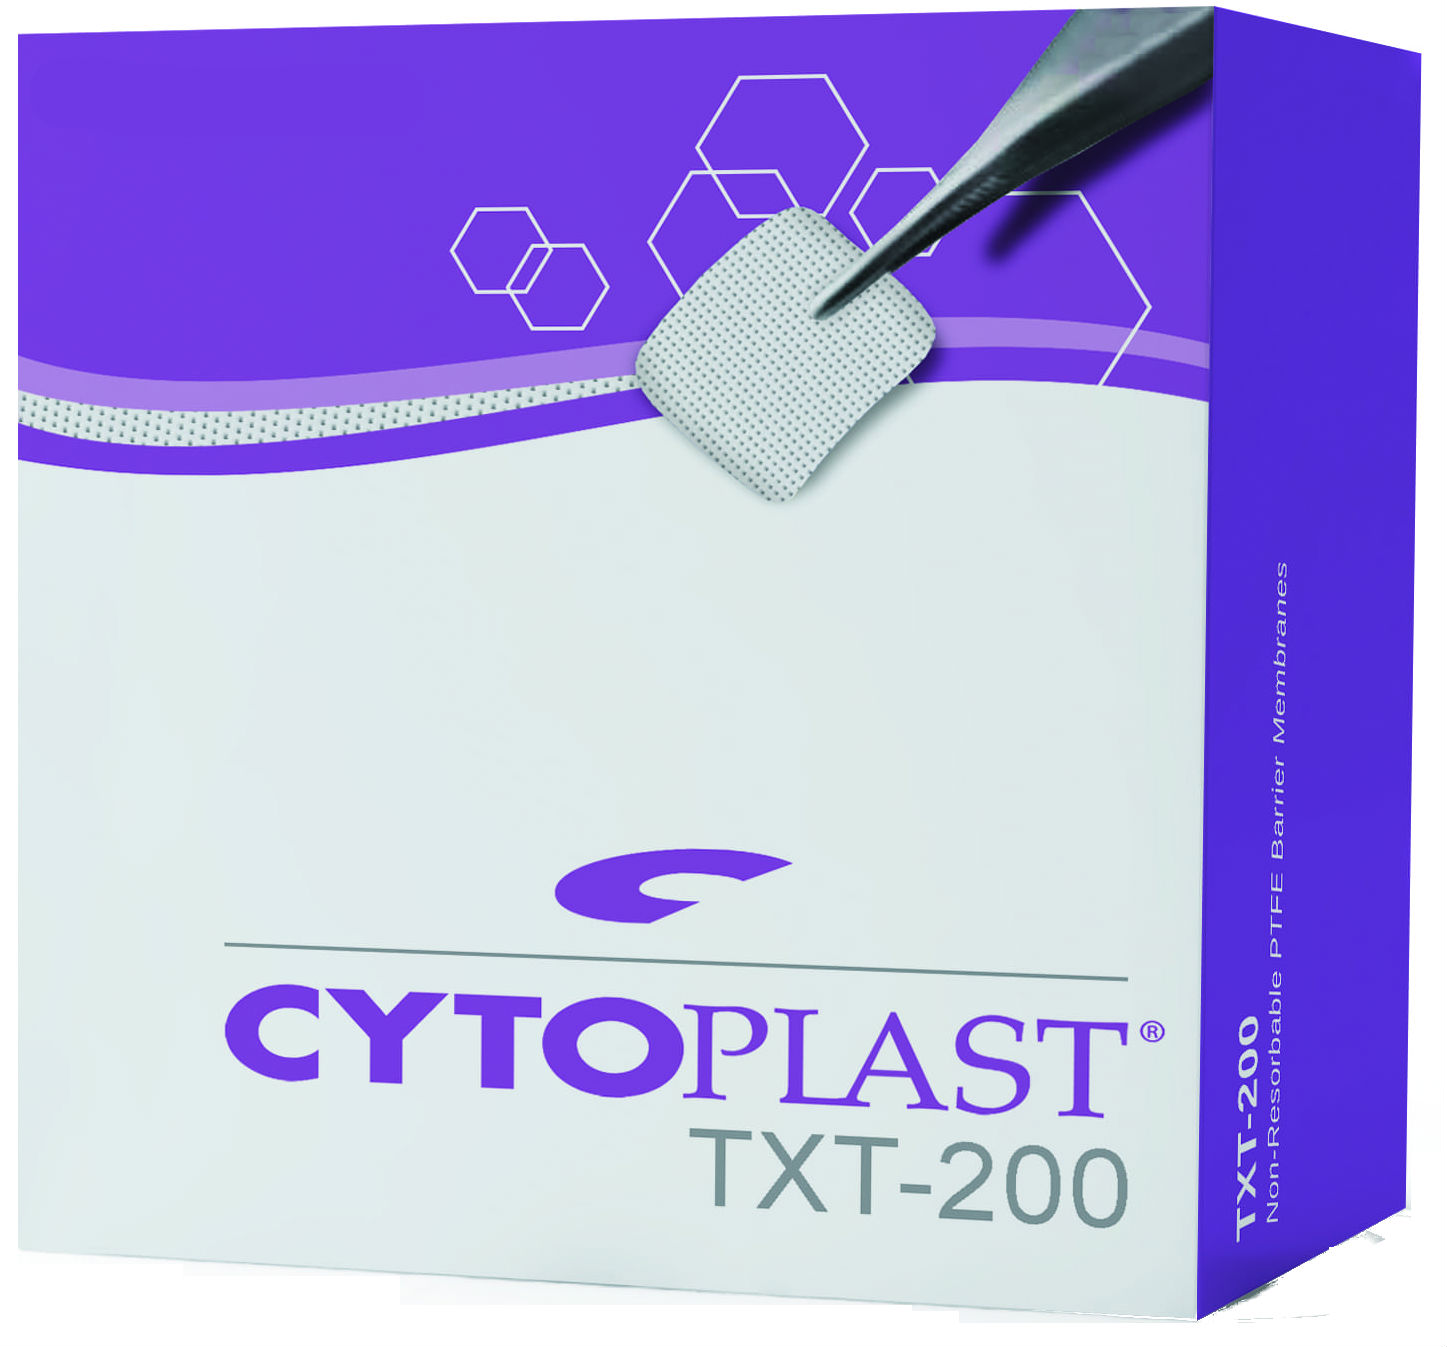 Cytoplast TXT 200